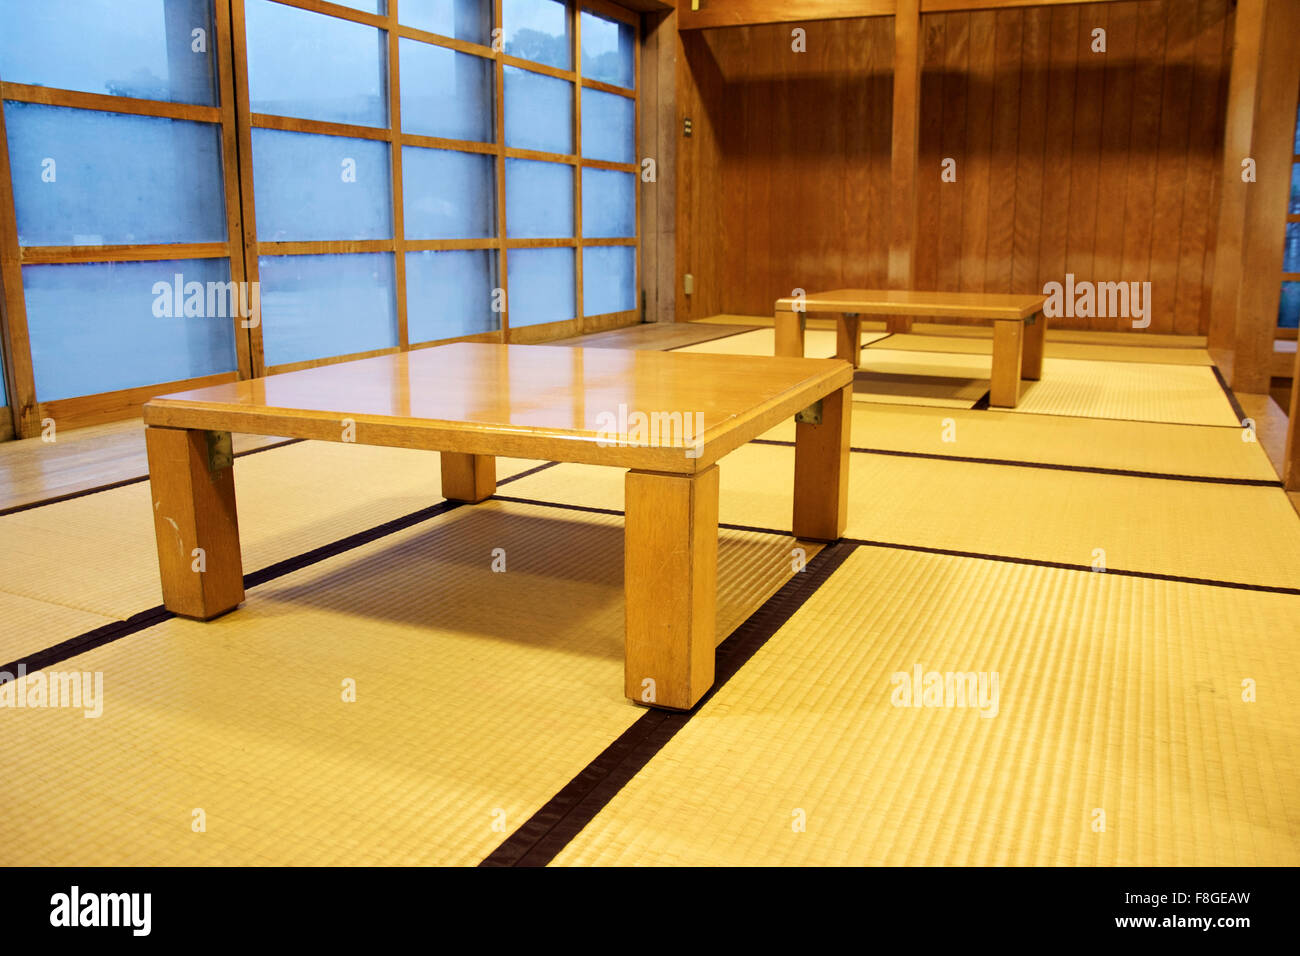 https://c8.alamy.com/compes/f8geaw/habitacion-cubiertos-con-tatami-japones-tradicional-f8geaw.jpg